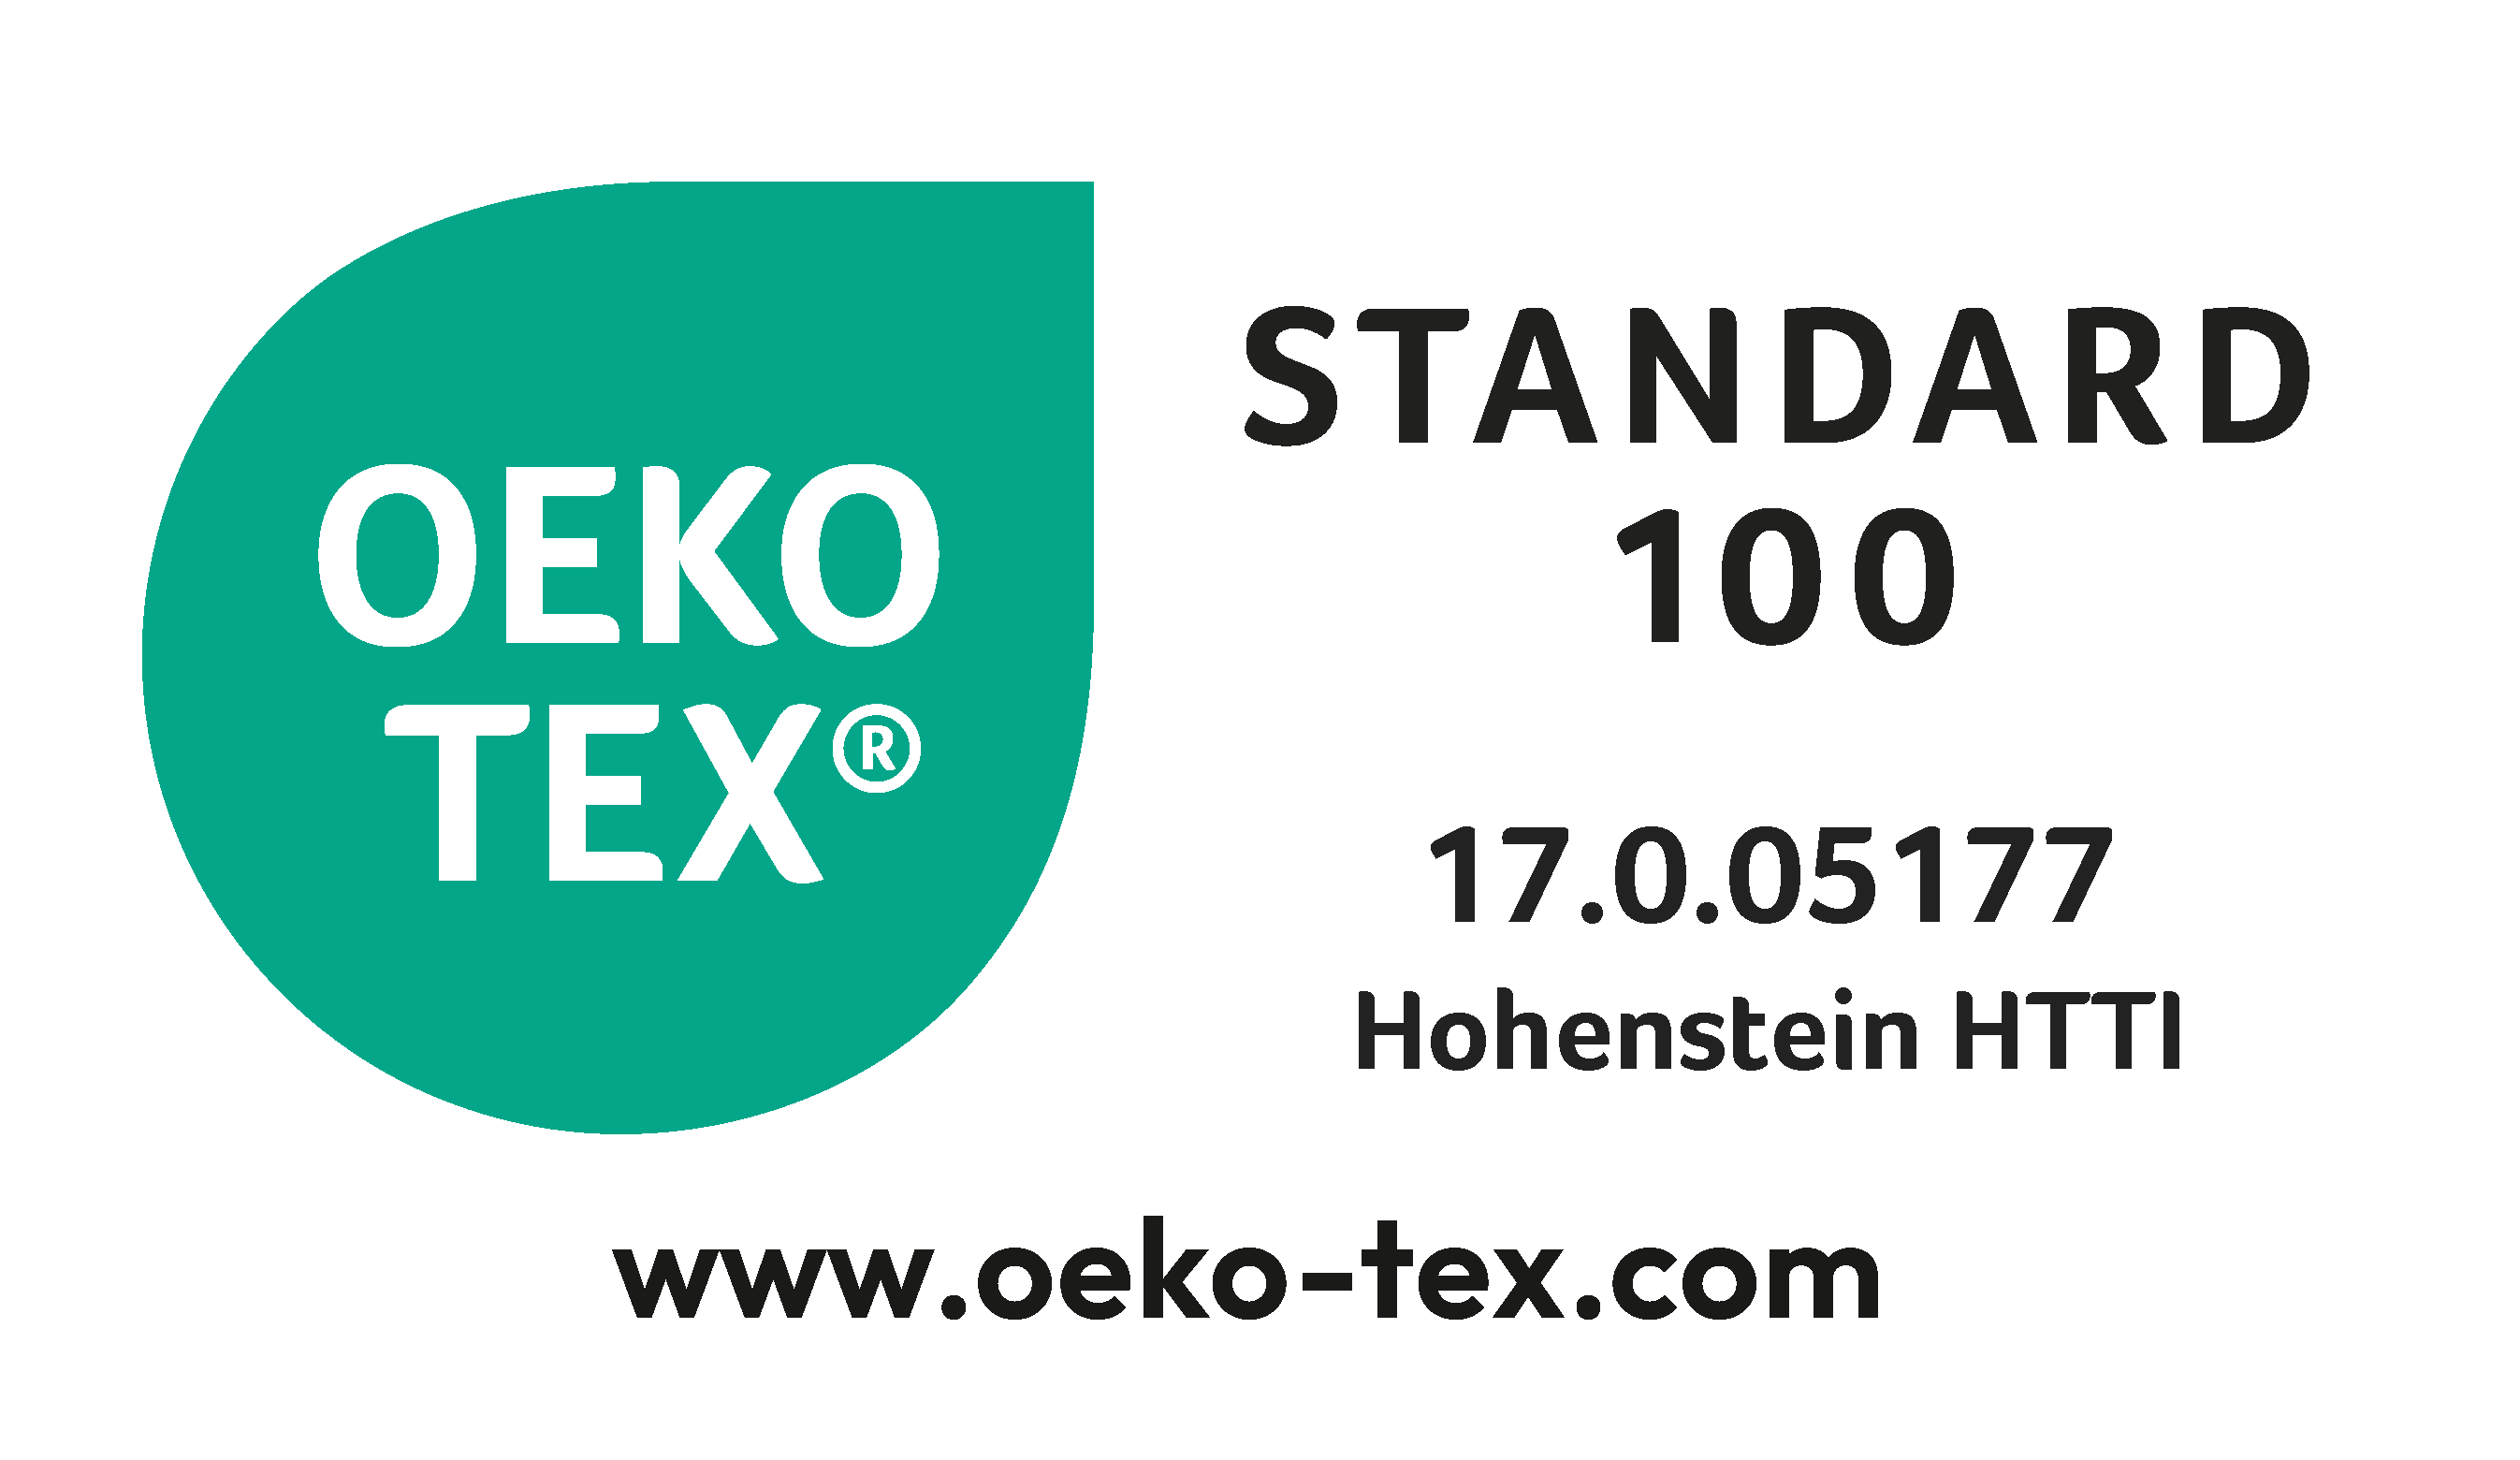 Certificate STANDARD 100 by OEKO-TEX®, Product class I